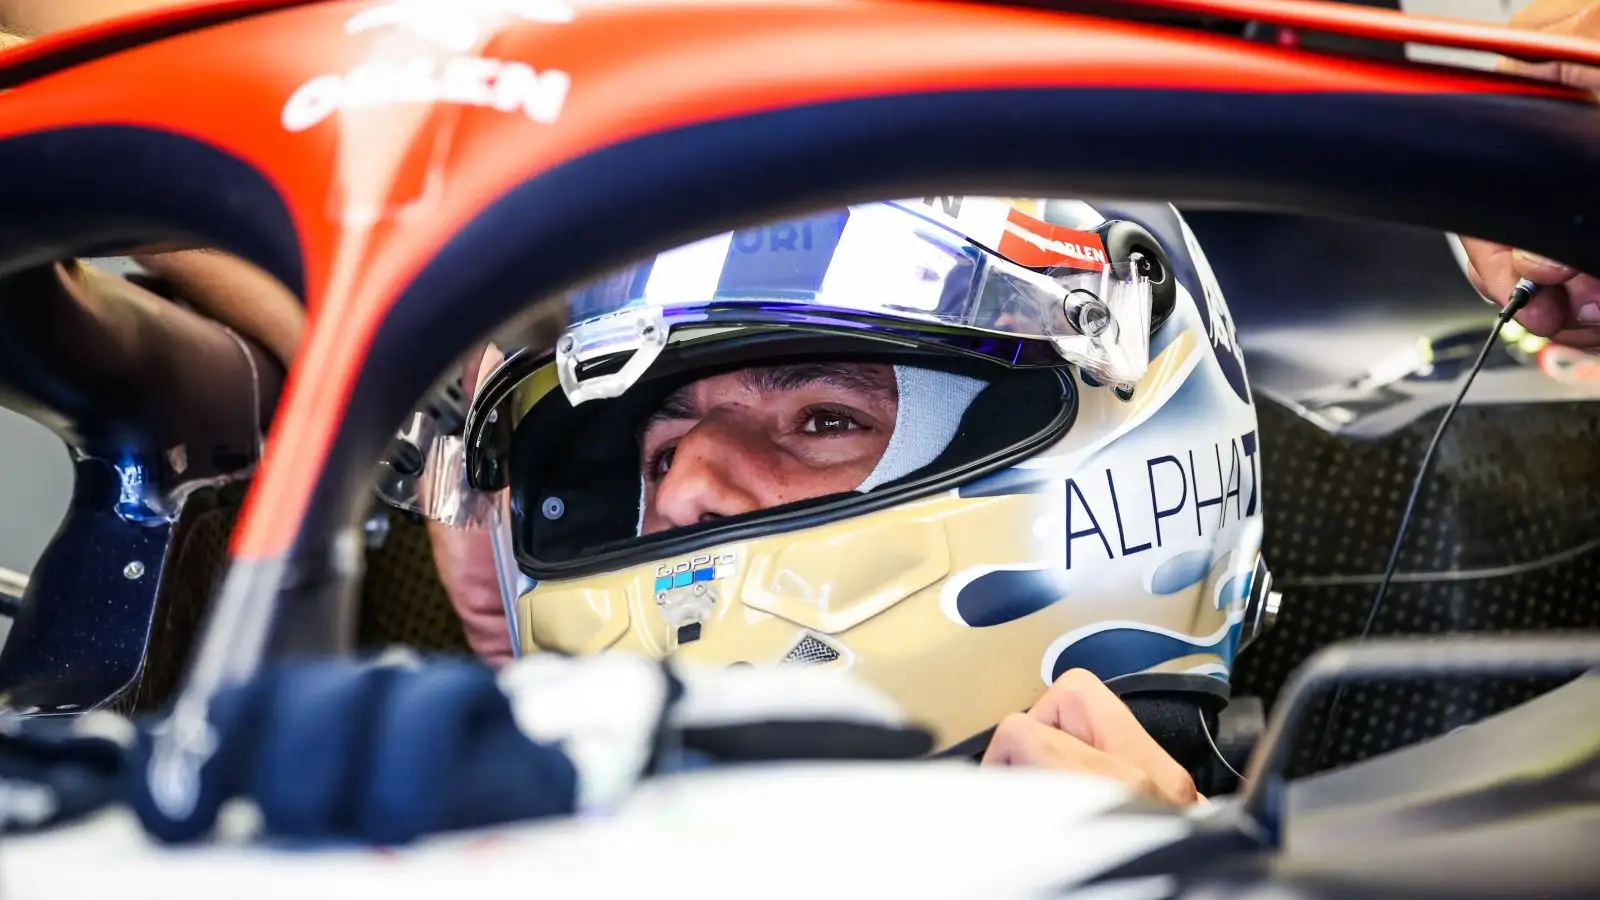 AlphaTauri driver Daniel Ricciardo